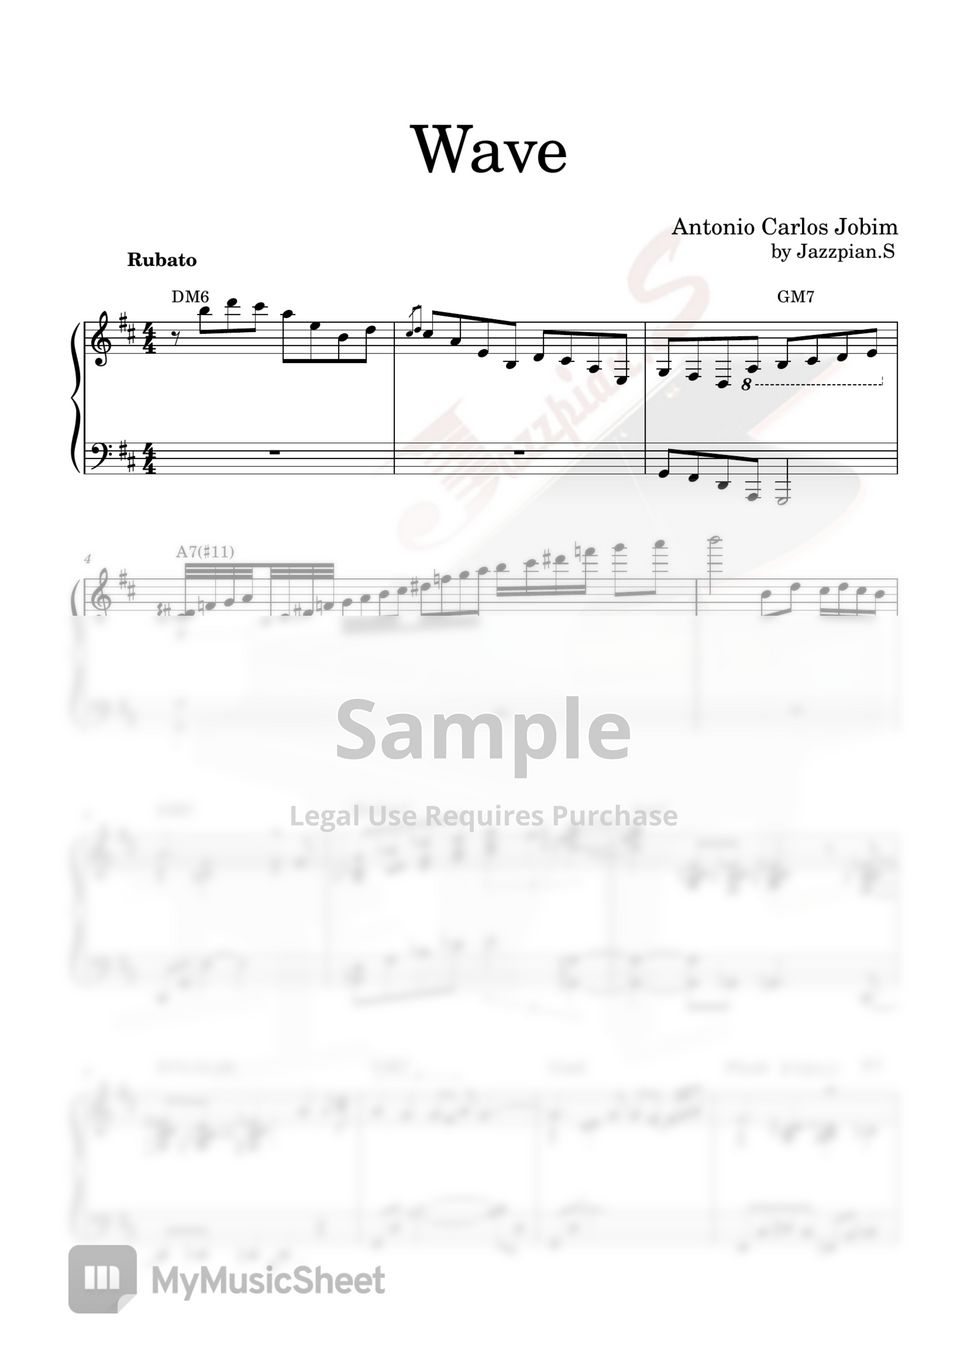 Antonio Carlos Jobim - Wave (Brazilian/Bossanova/Samba jazz piano) by Jazzpian.S